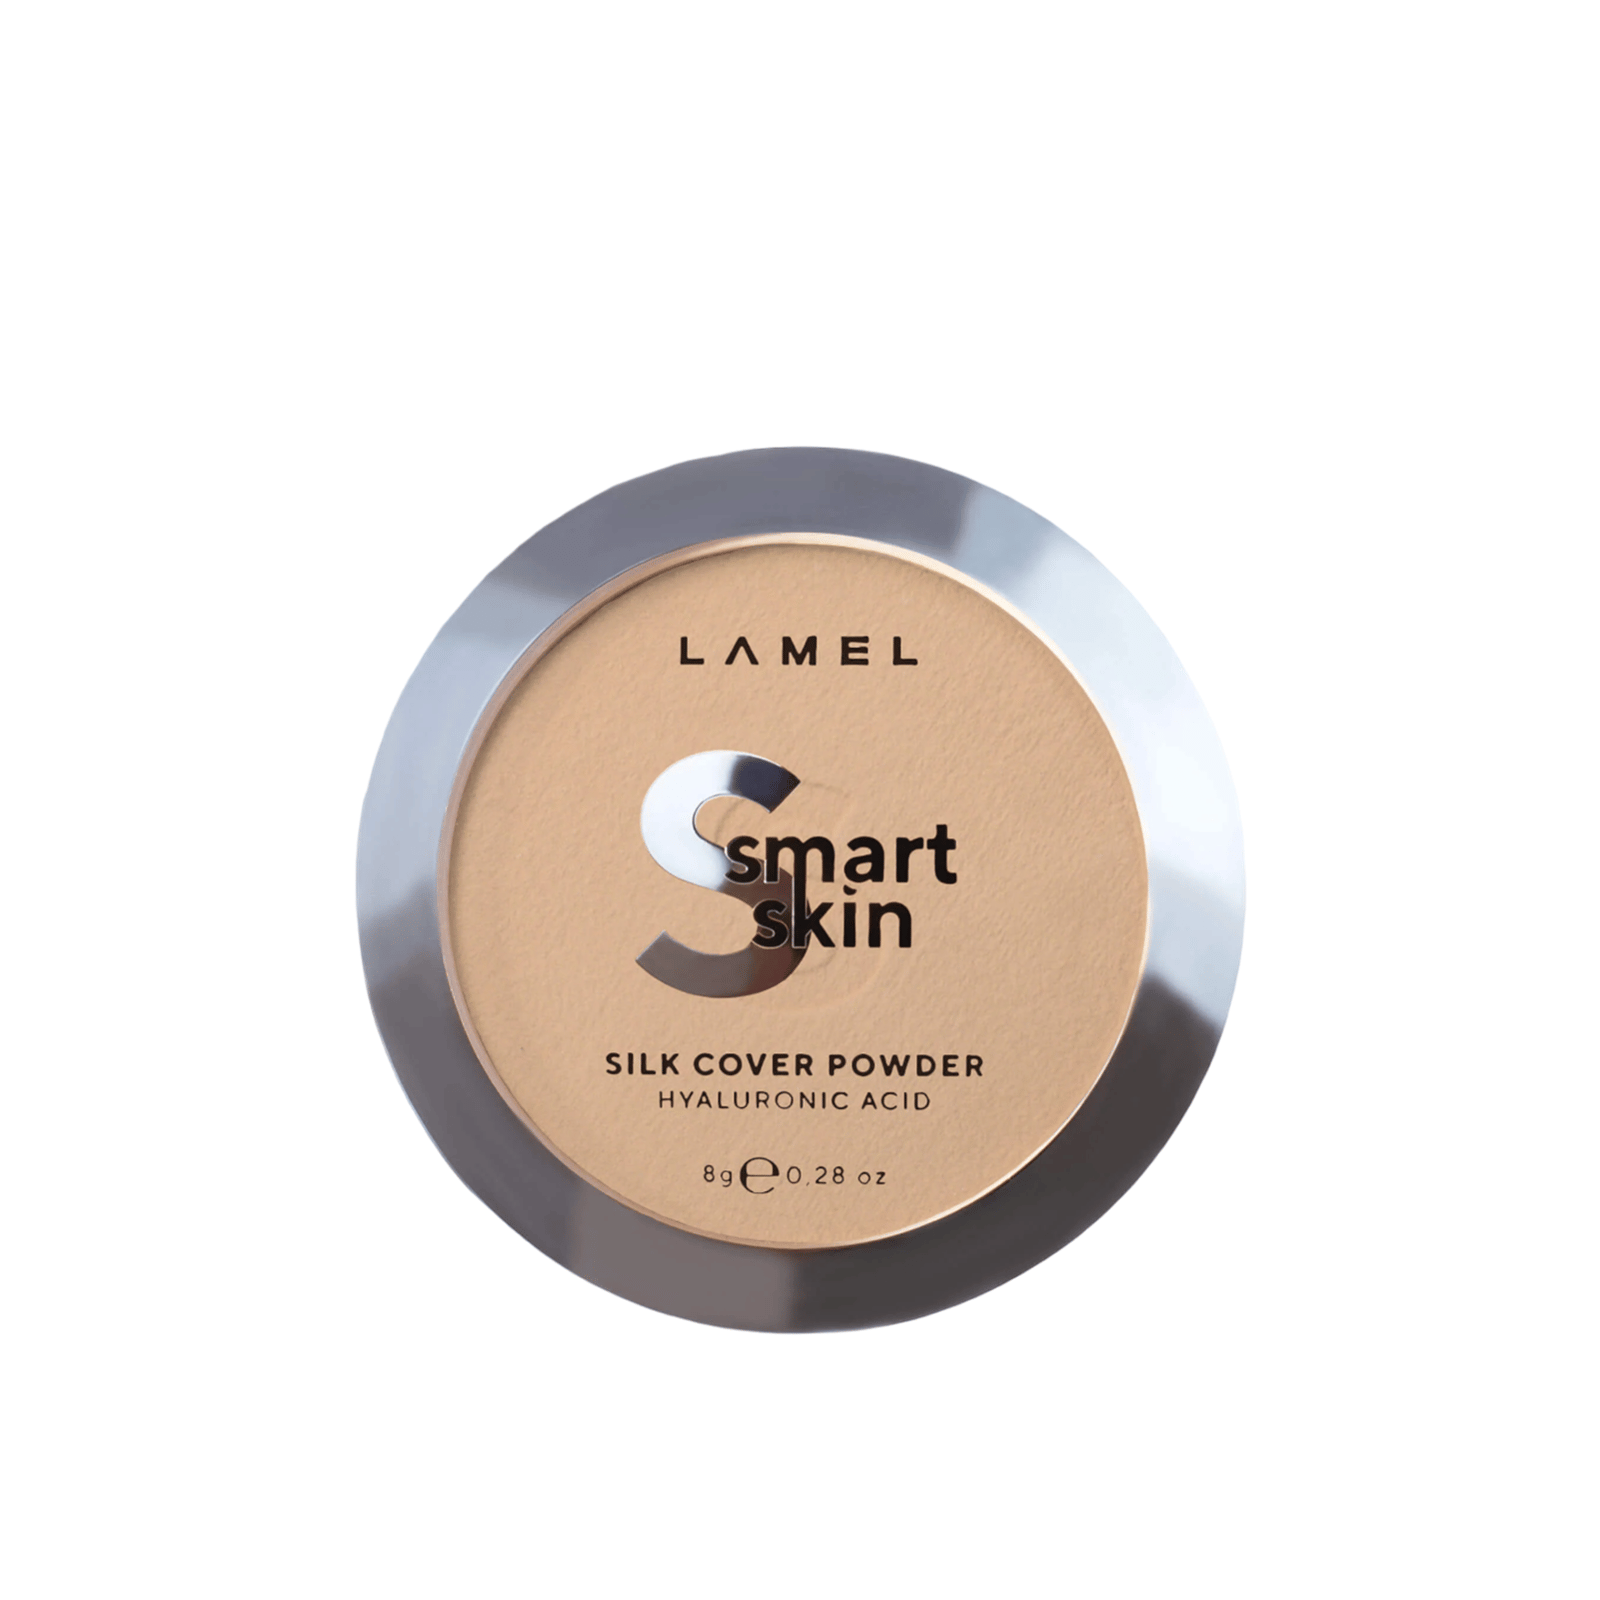 Lamel Smart Skin Silk Cover Powder 404 Tan Beige 8g